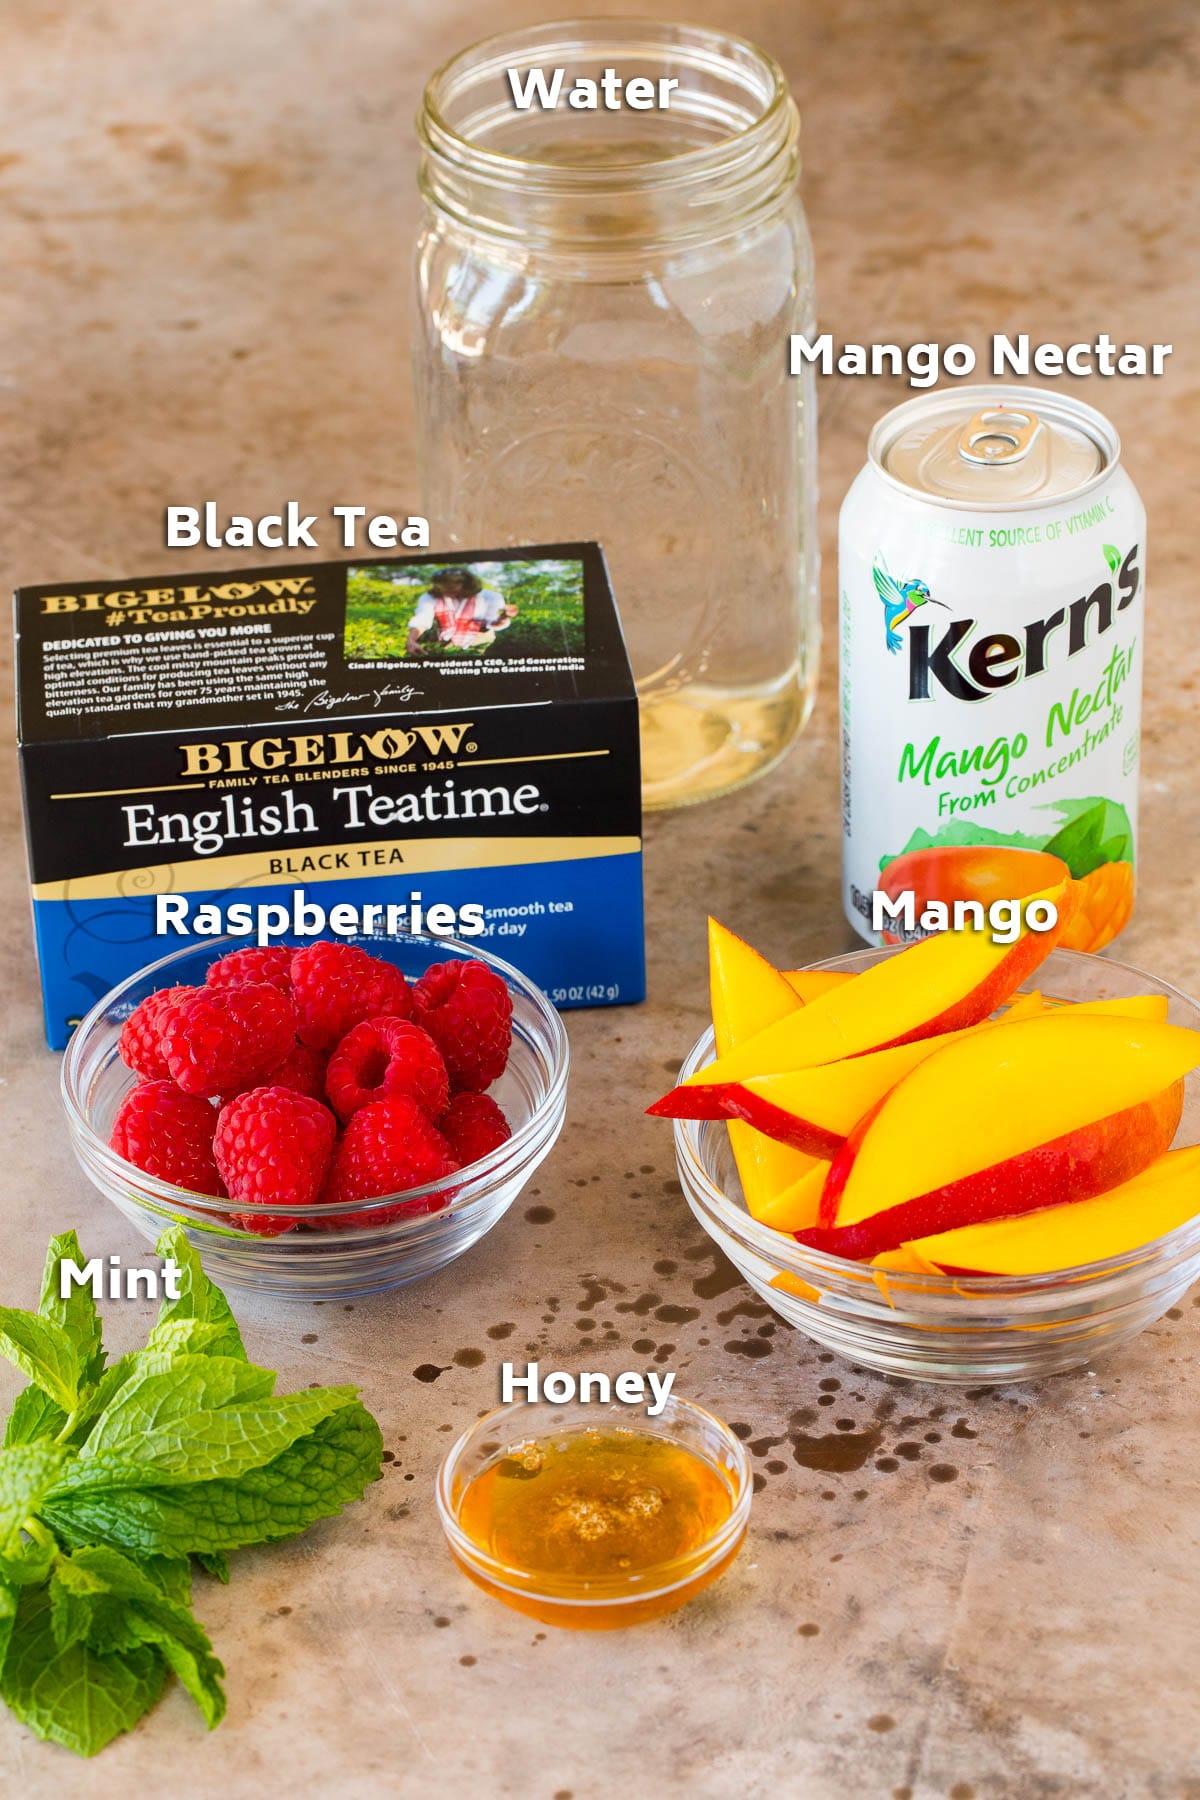 Ingredients including tea, mango nectar, fruit and honey.